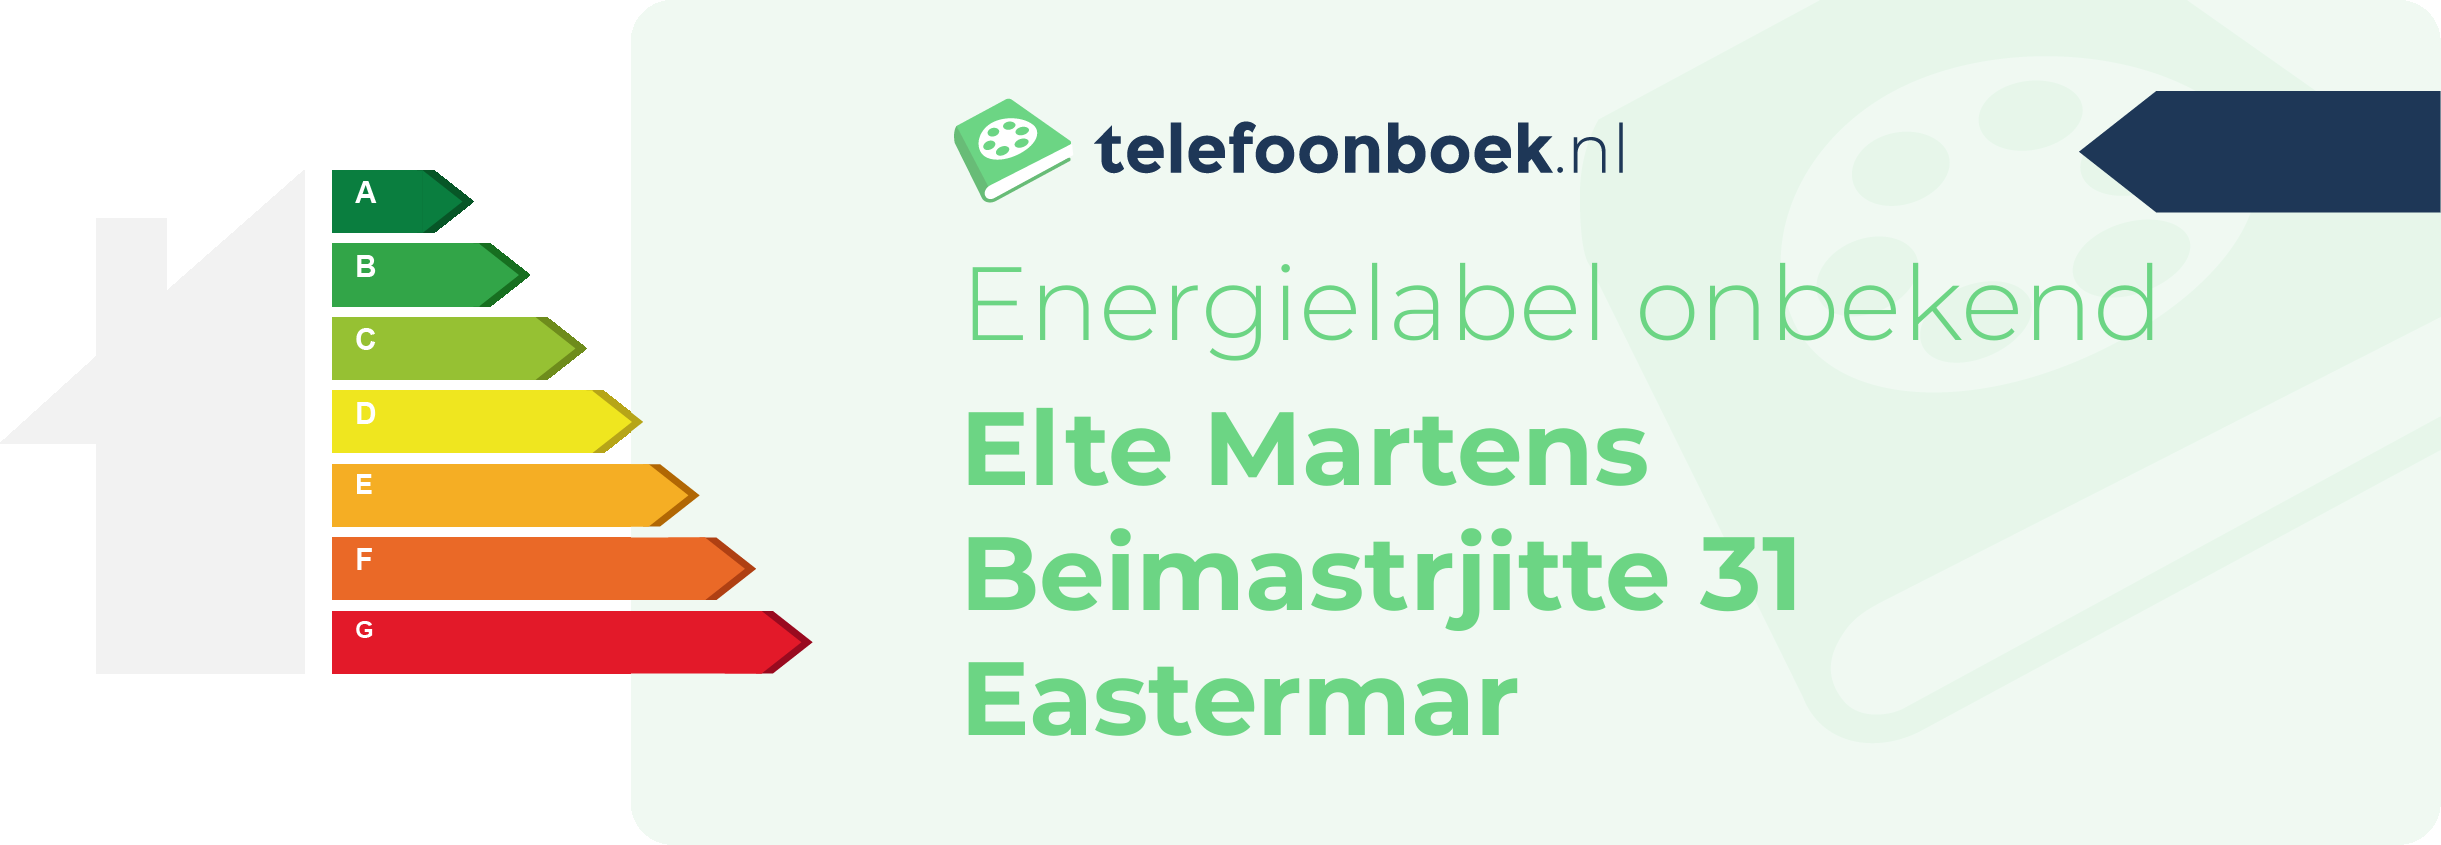 Energielabel Elte Martens Beimastrjitte 31 Eastermar